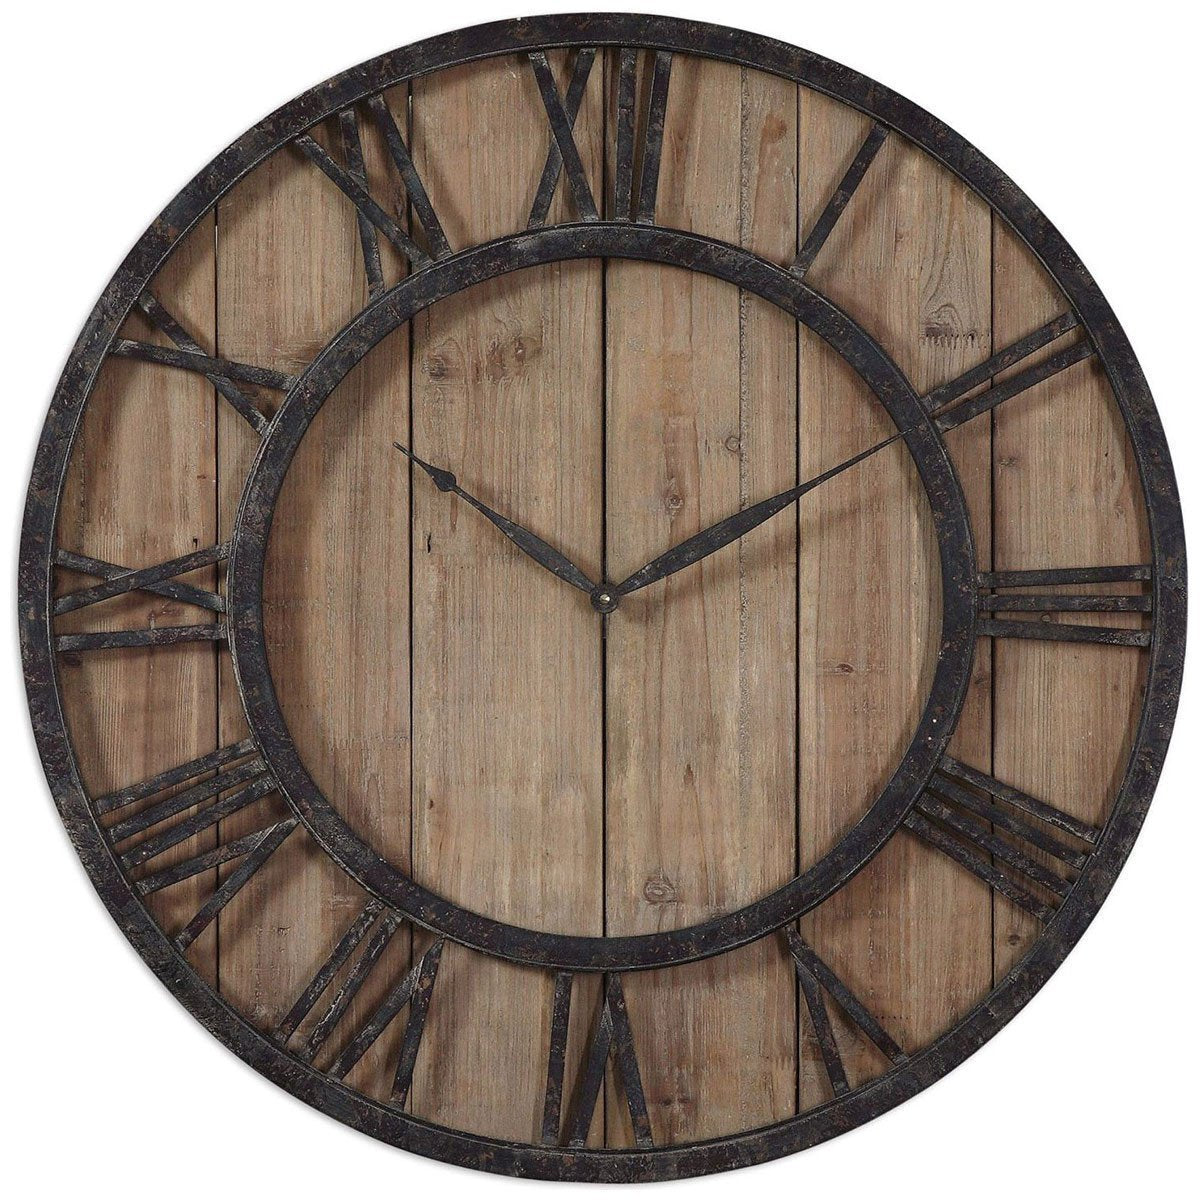 Uttermost Powell Wooden Wall Clock